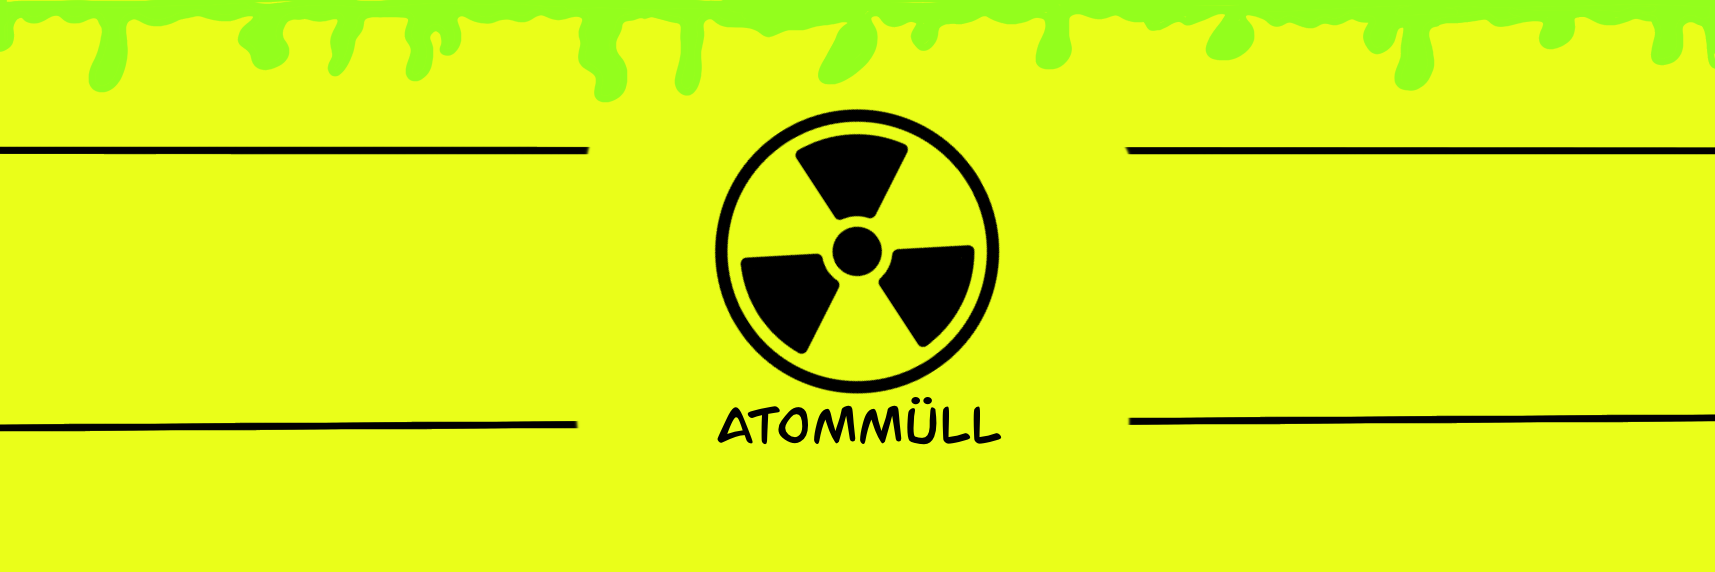 Atommuell-Banderole